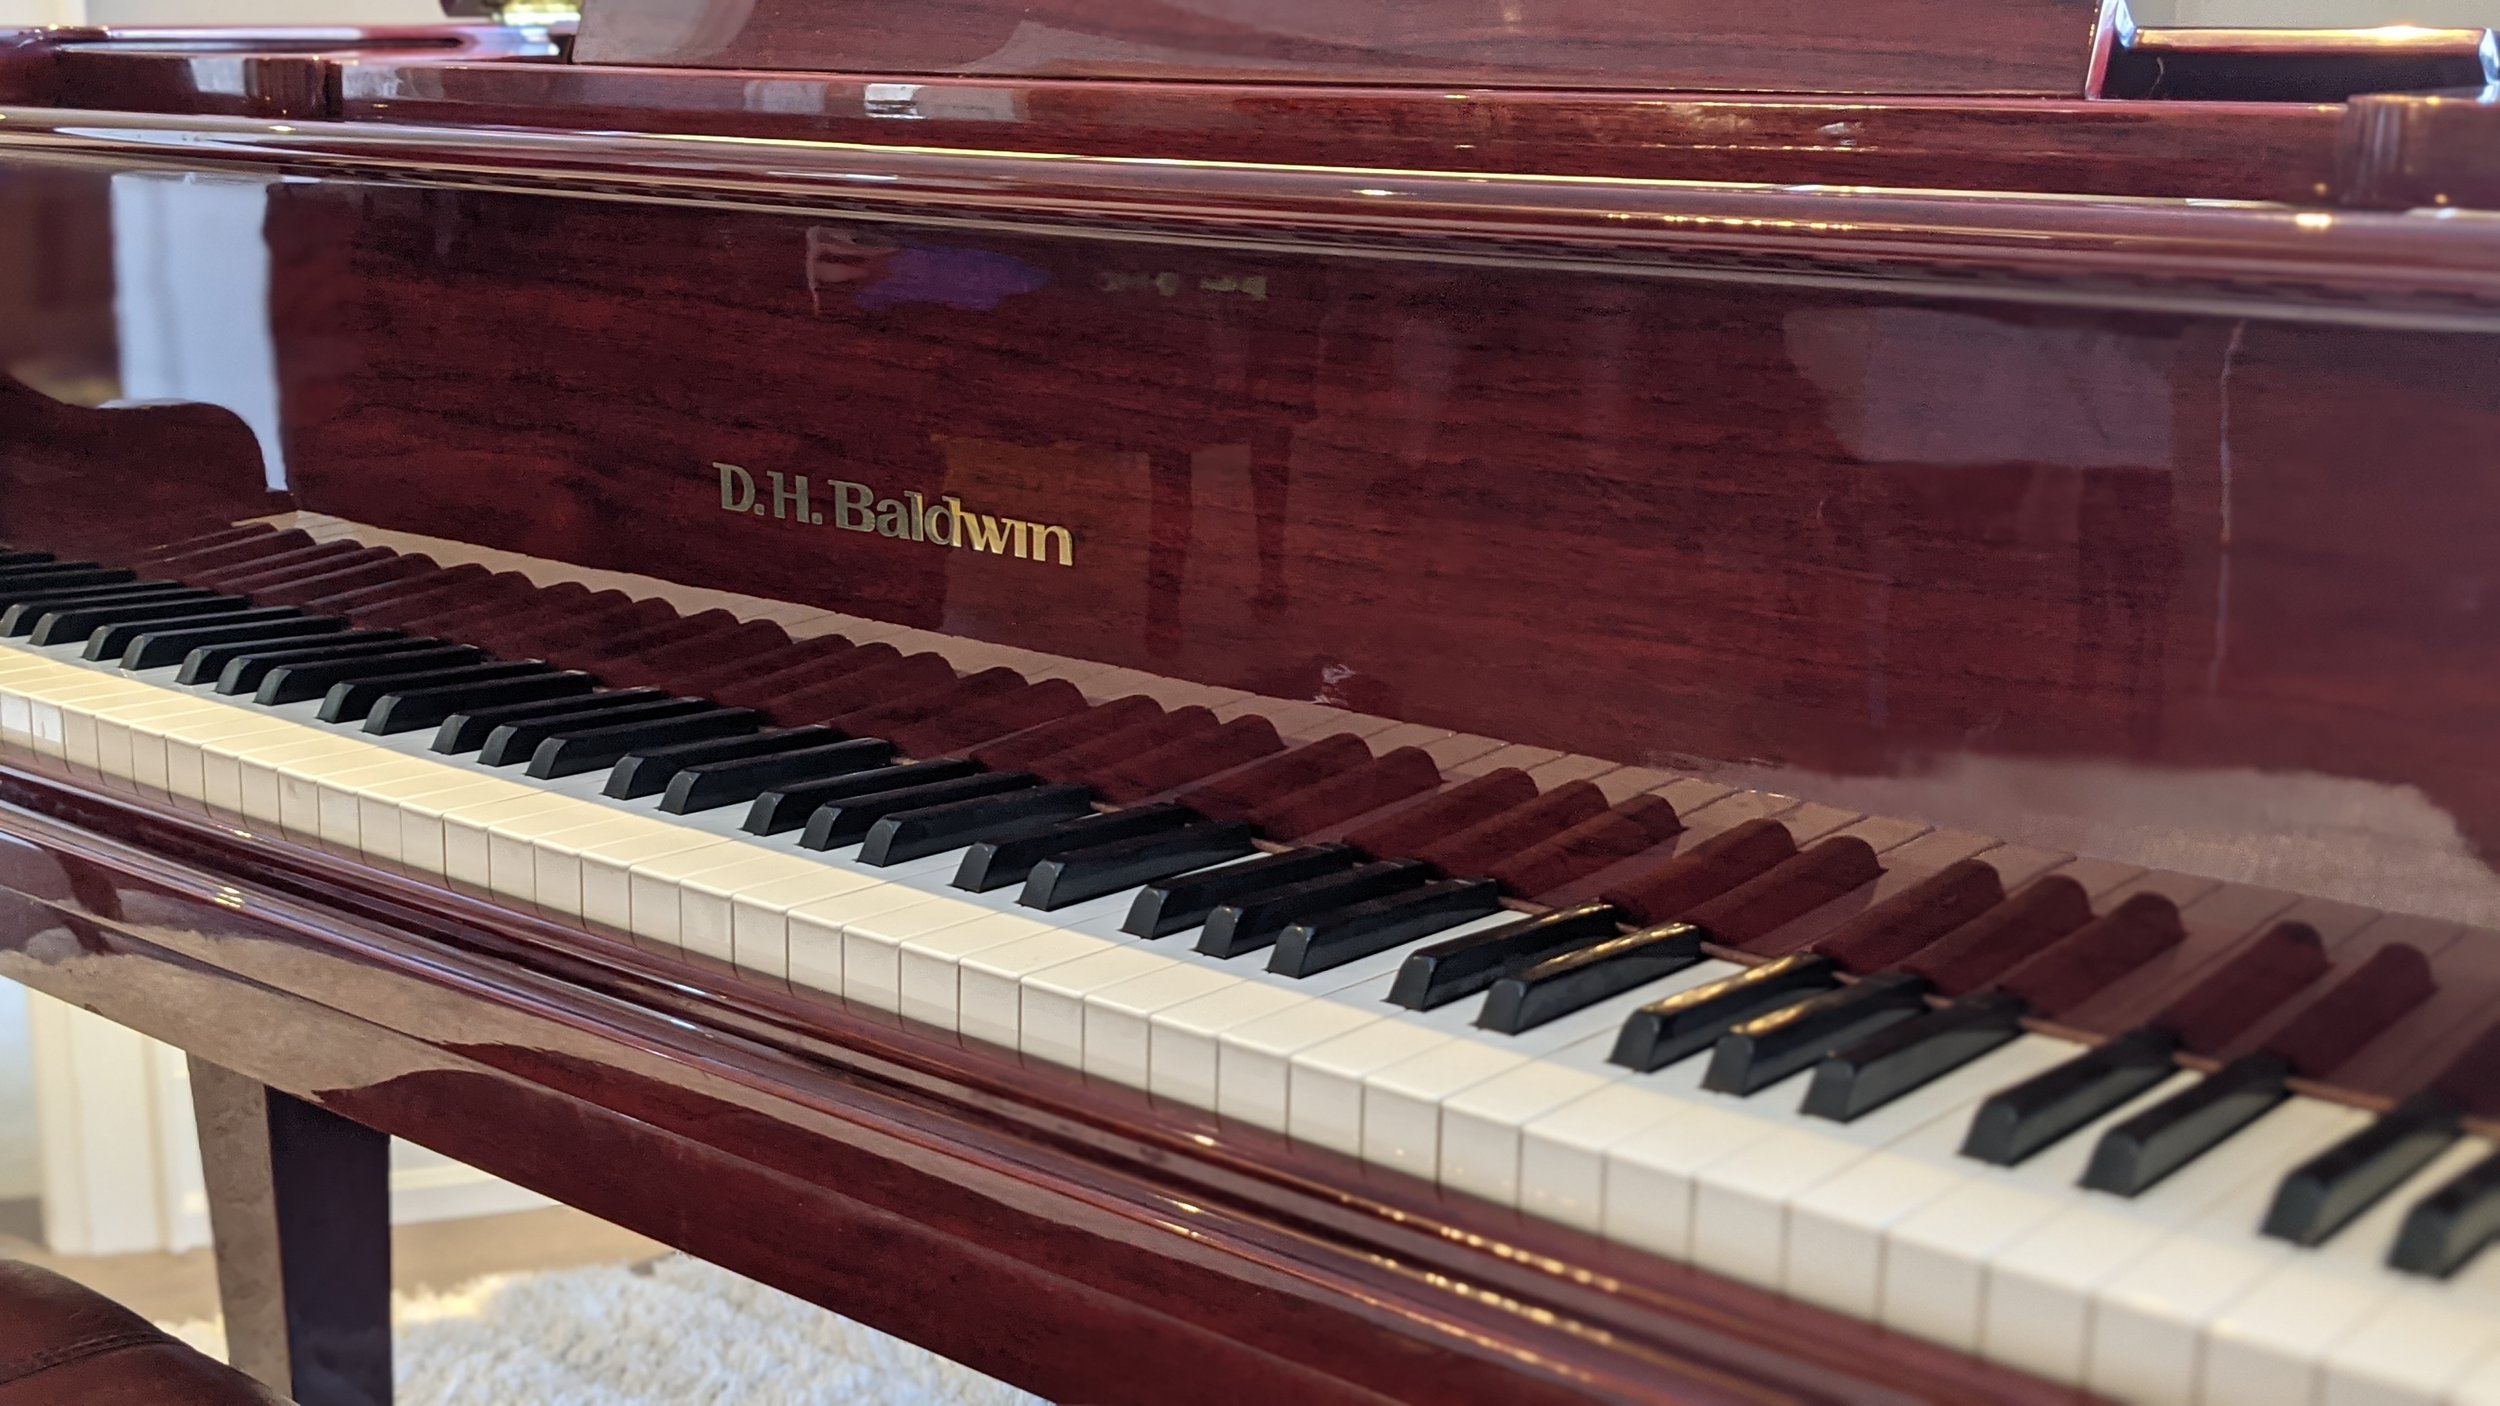 DH Baldwin baby grand piano for sale3.jpg